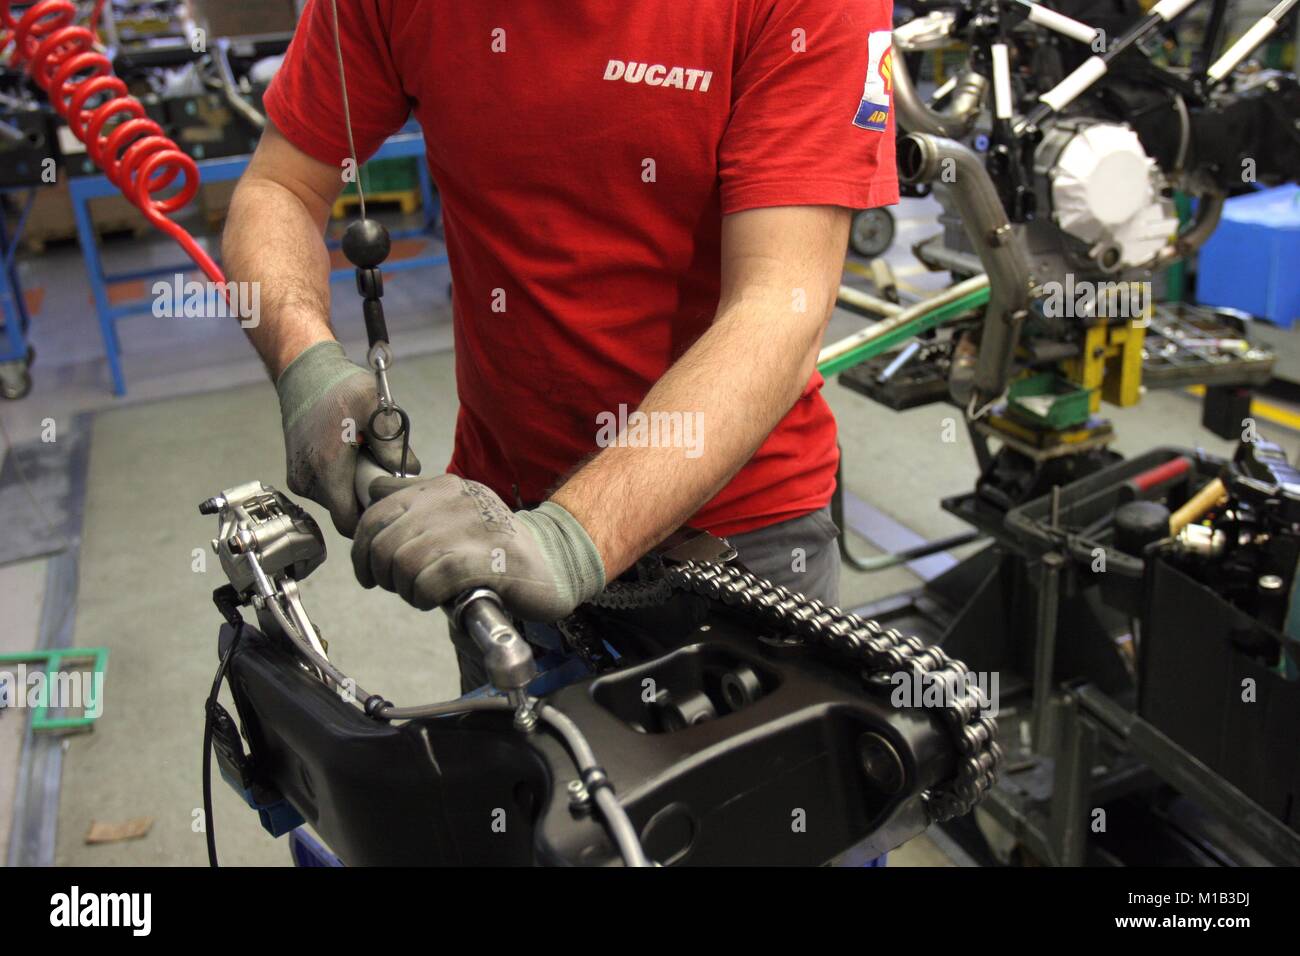 Ducati Motor Factory, Bologne, Emilie-Romagne, Italie © Riccardo Squillantini/Sintesi/Alamy Stock Photo Banque D'Images